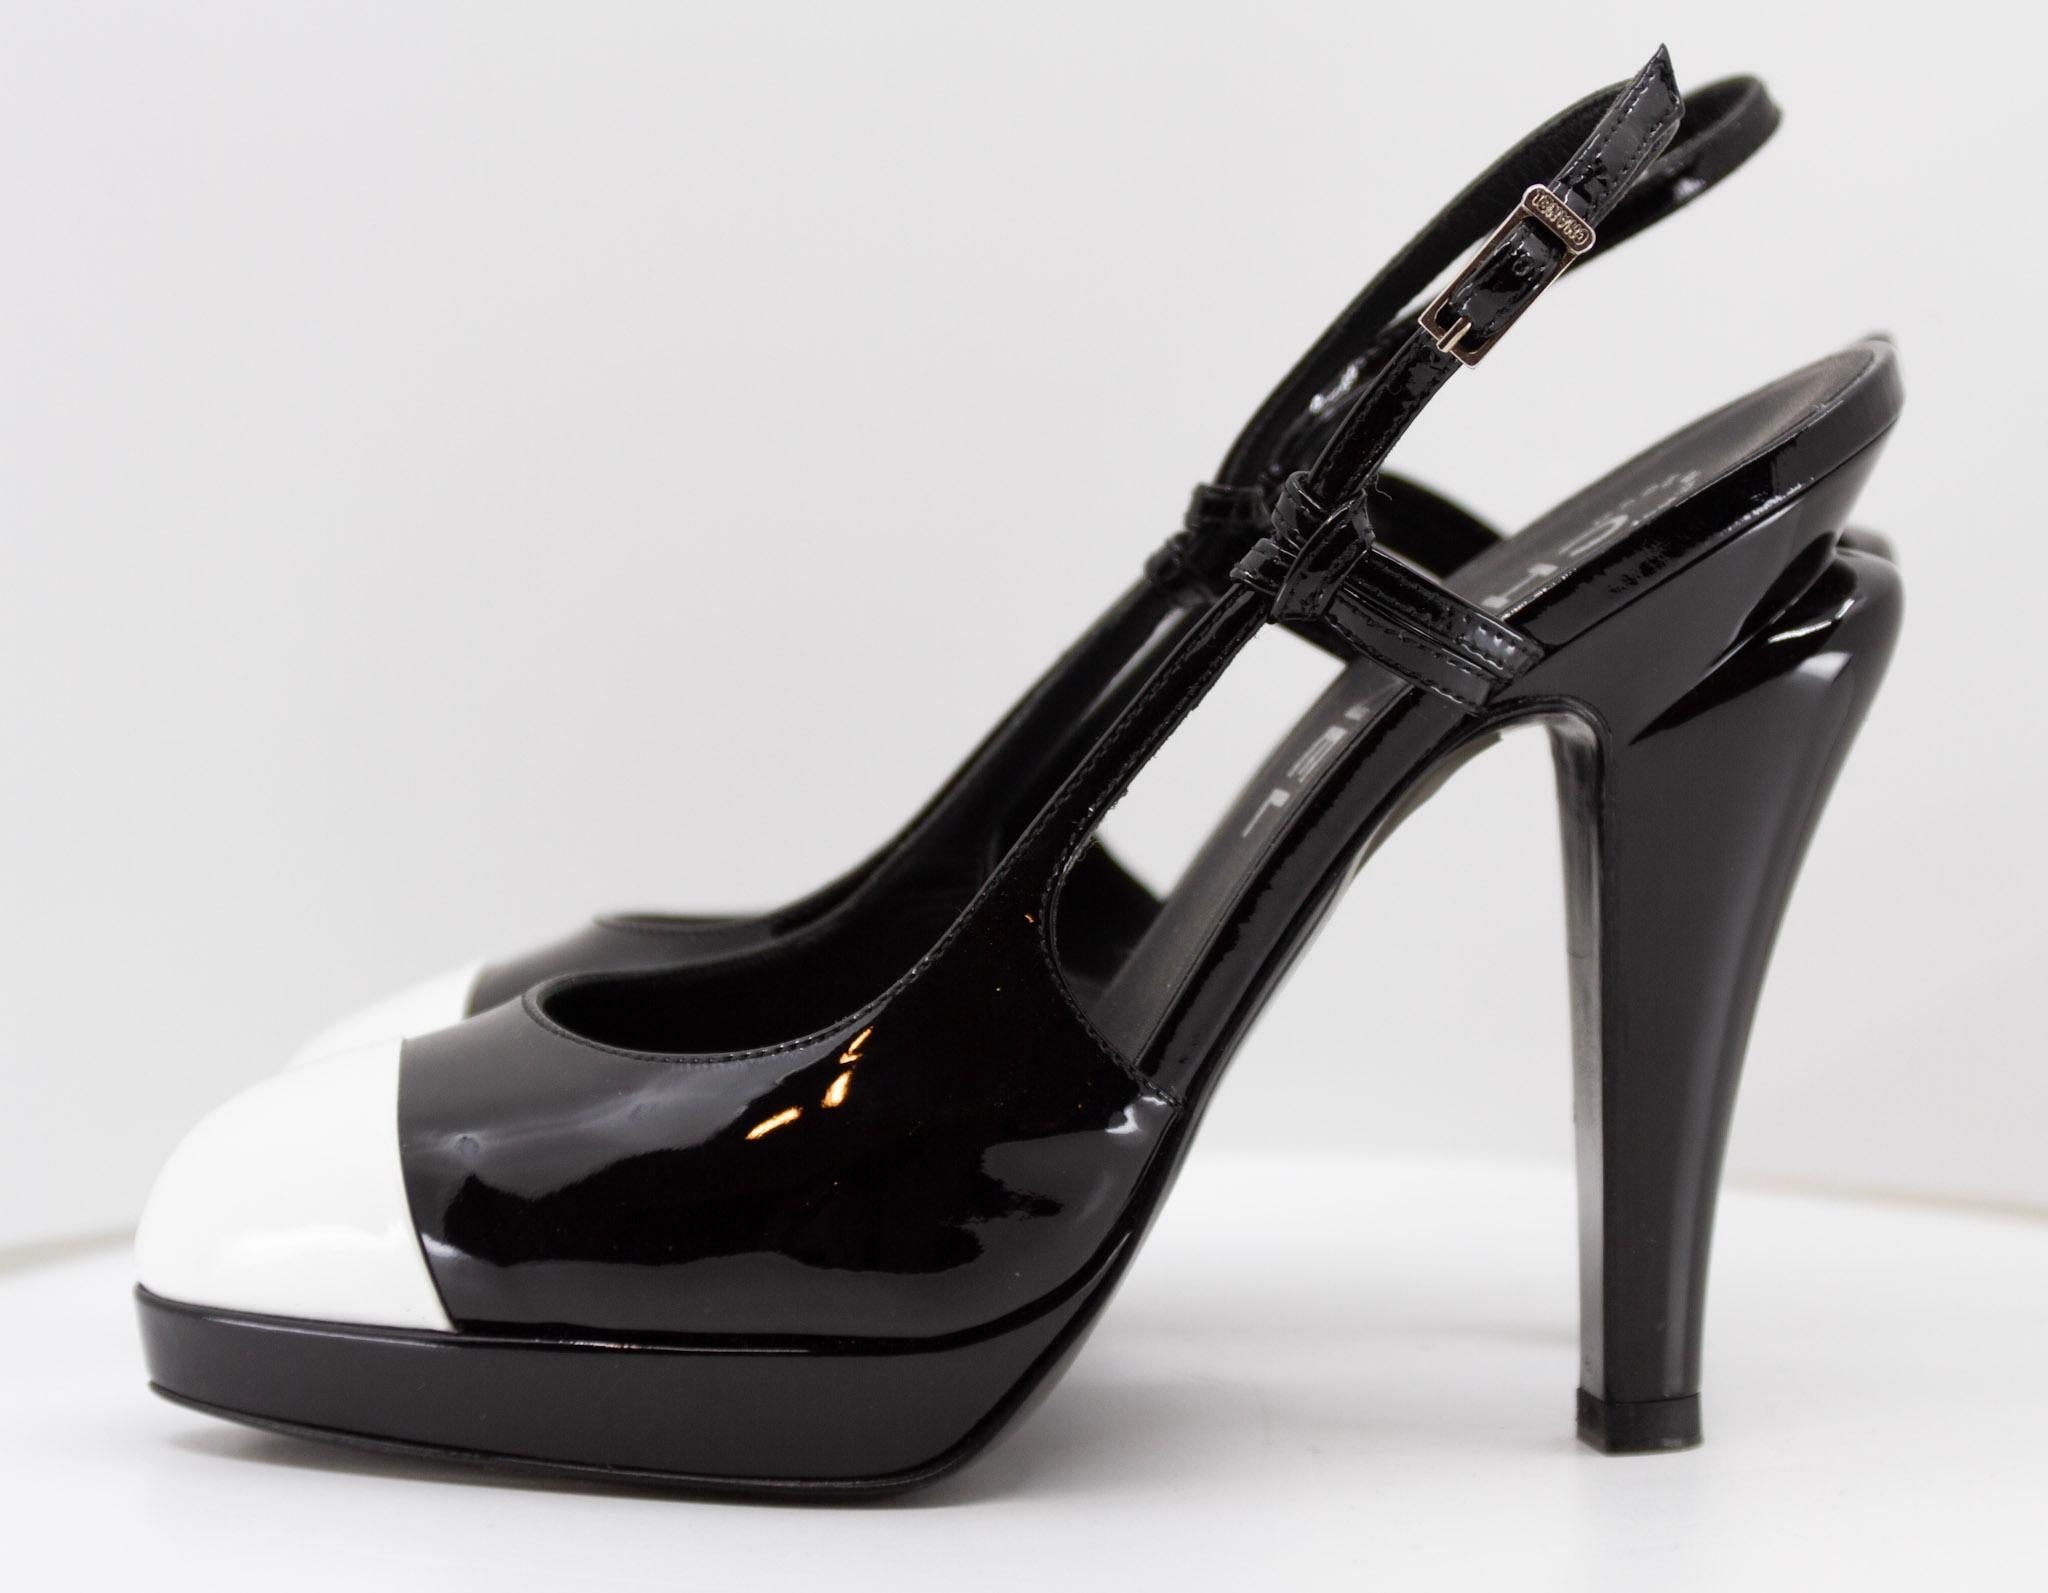 Chanel black + white patent leather slingbacks, 2008

Size 36.5, US 6.5